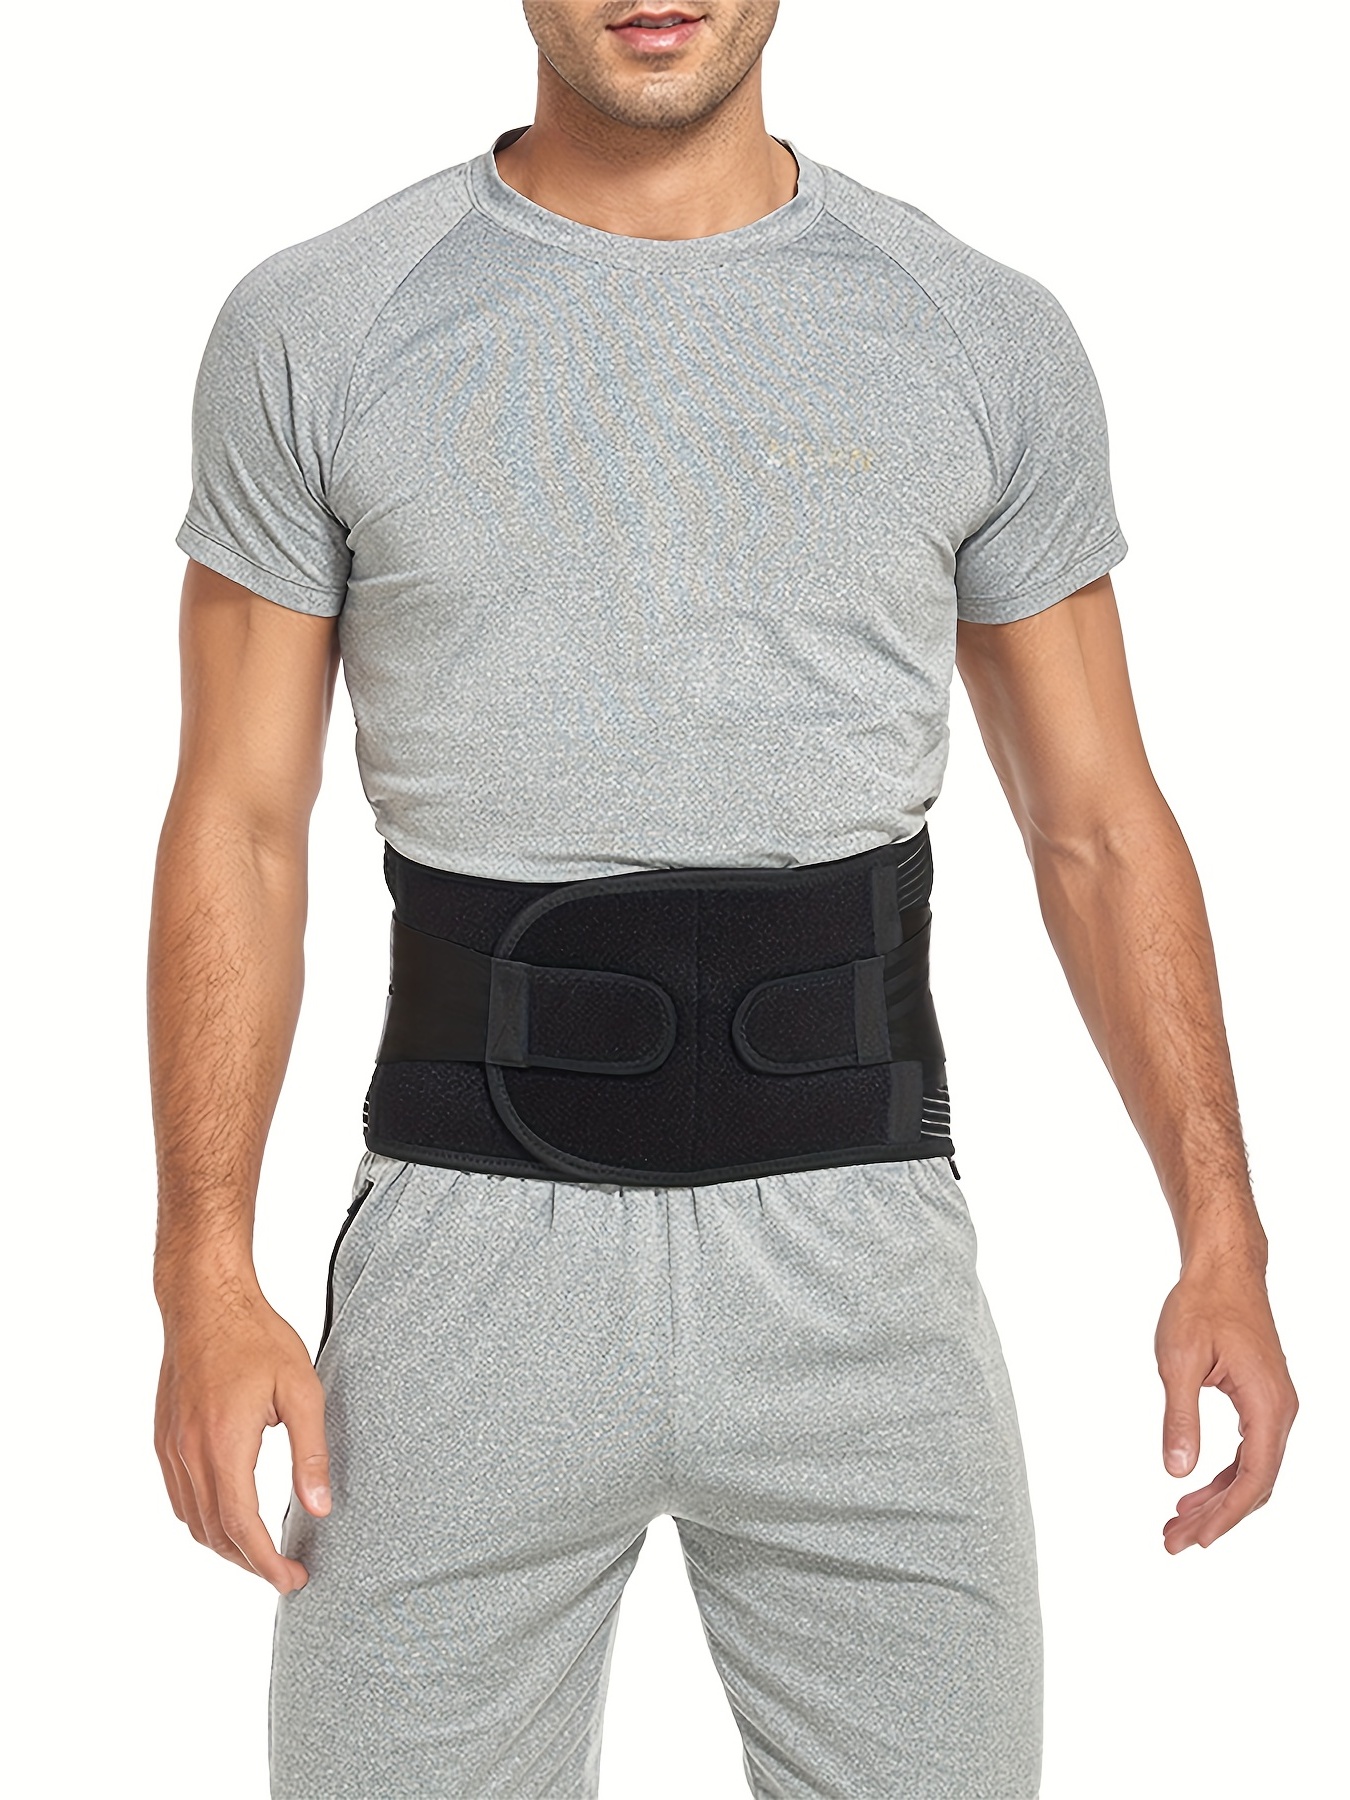 Freetoo Black Back Brace Support Waist Size Large For Back Pain